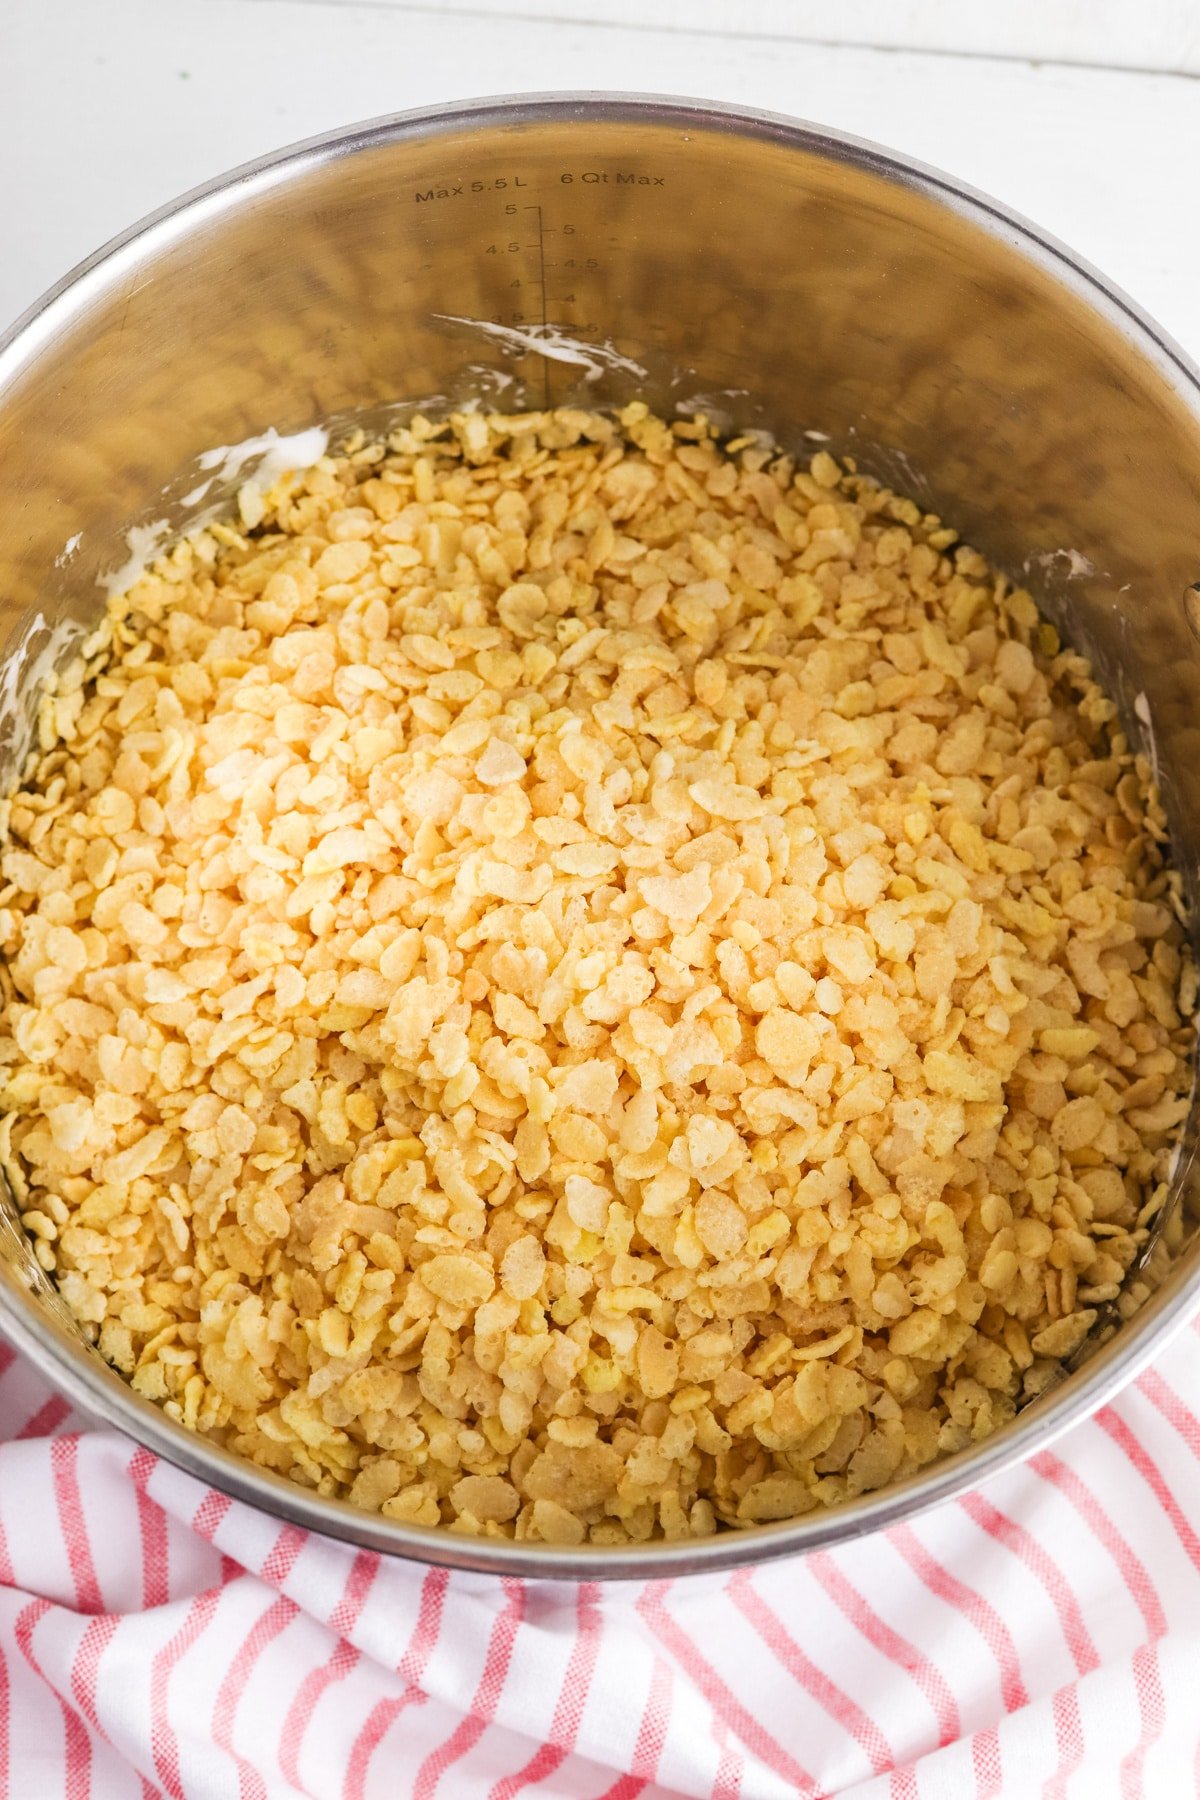 Add crispy rice cereal